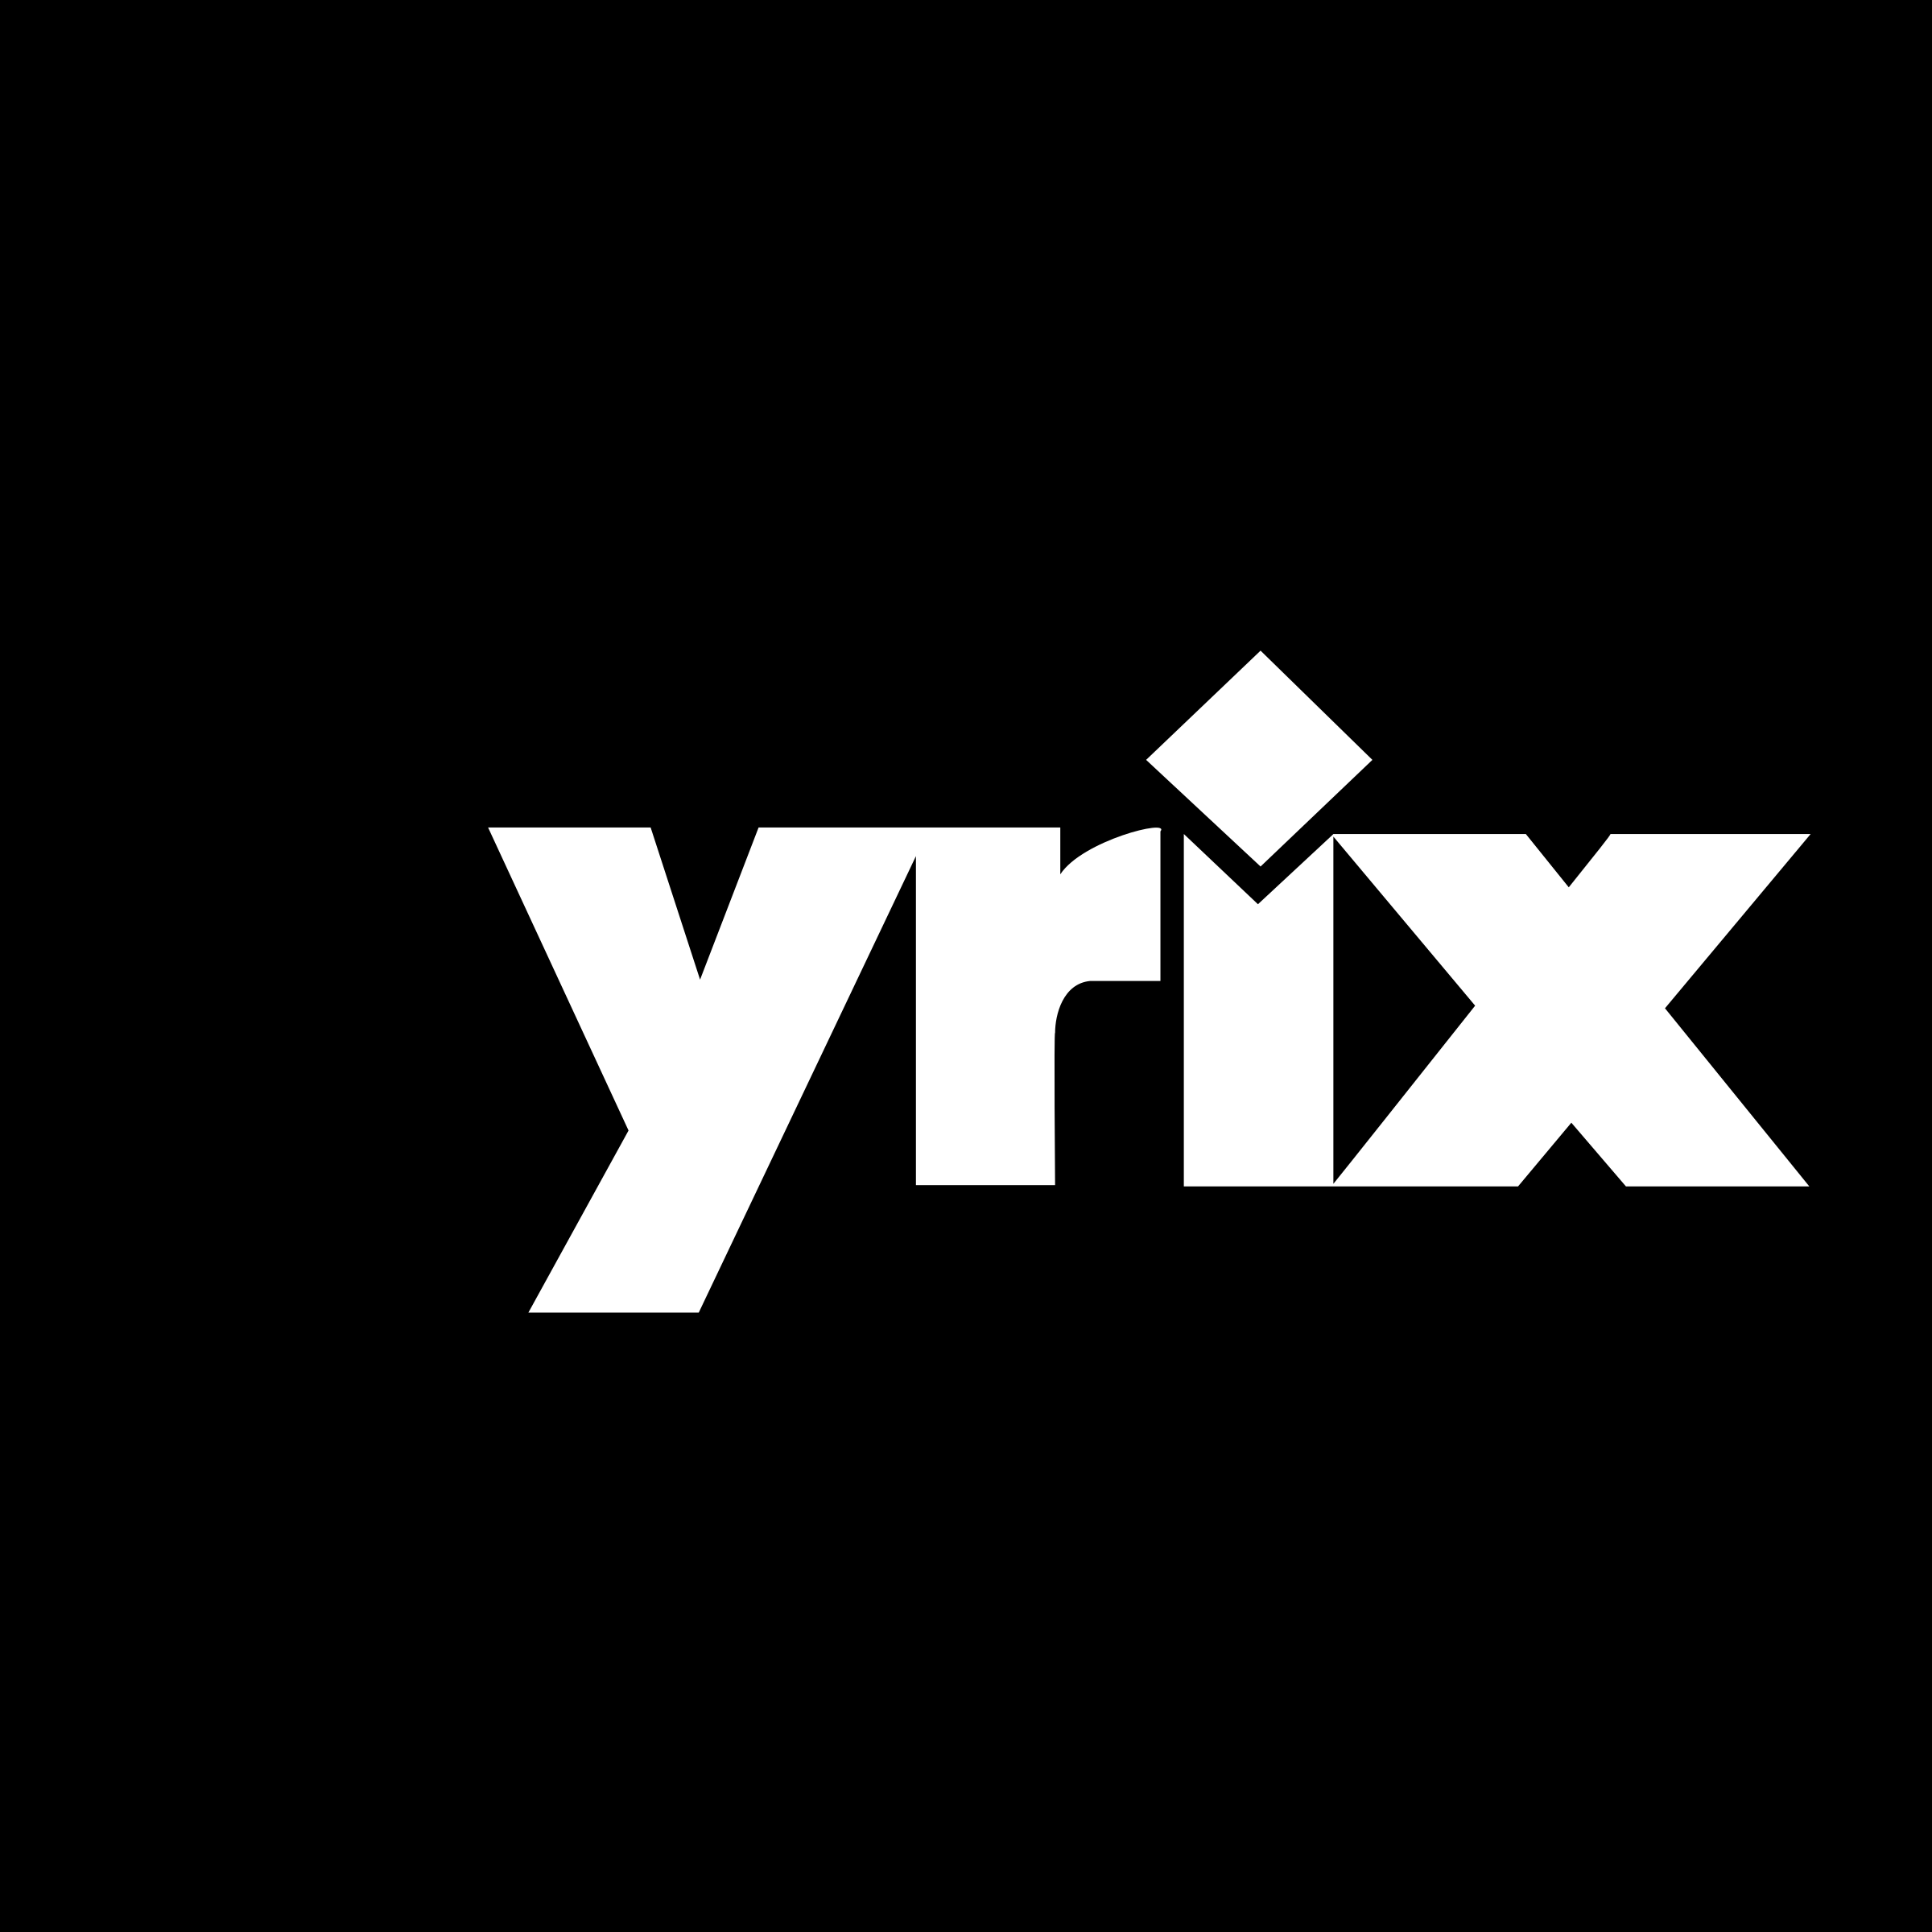 Cyrix Logo - Cyrix Logo PNG Transparent & SVG Vector - Freebie Supply